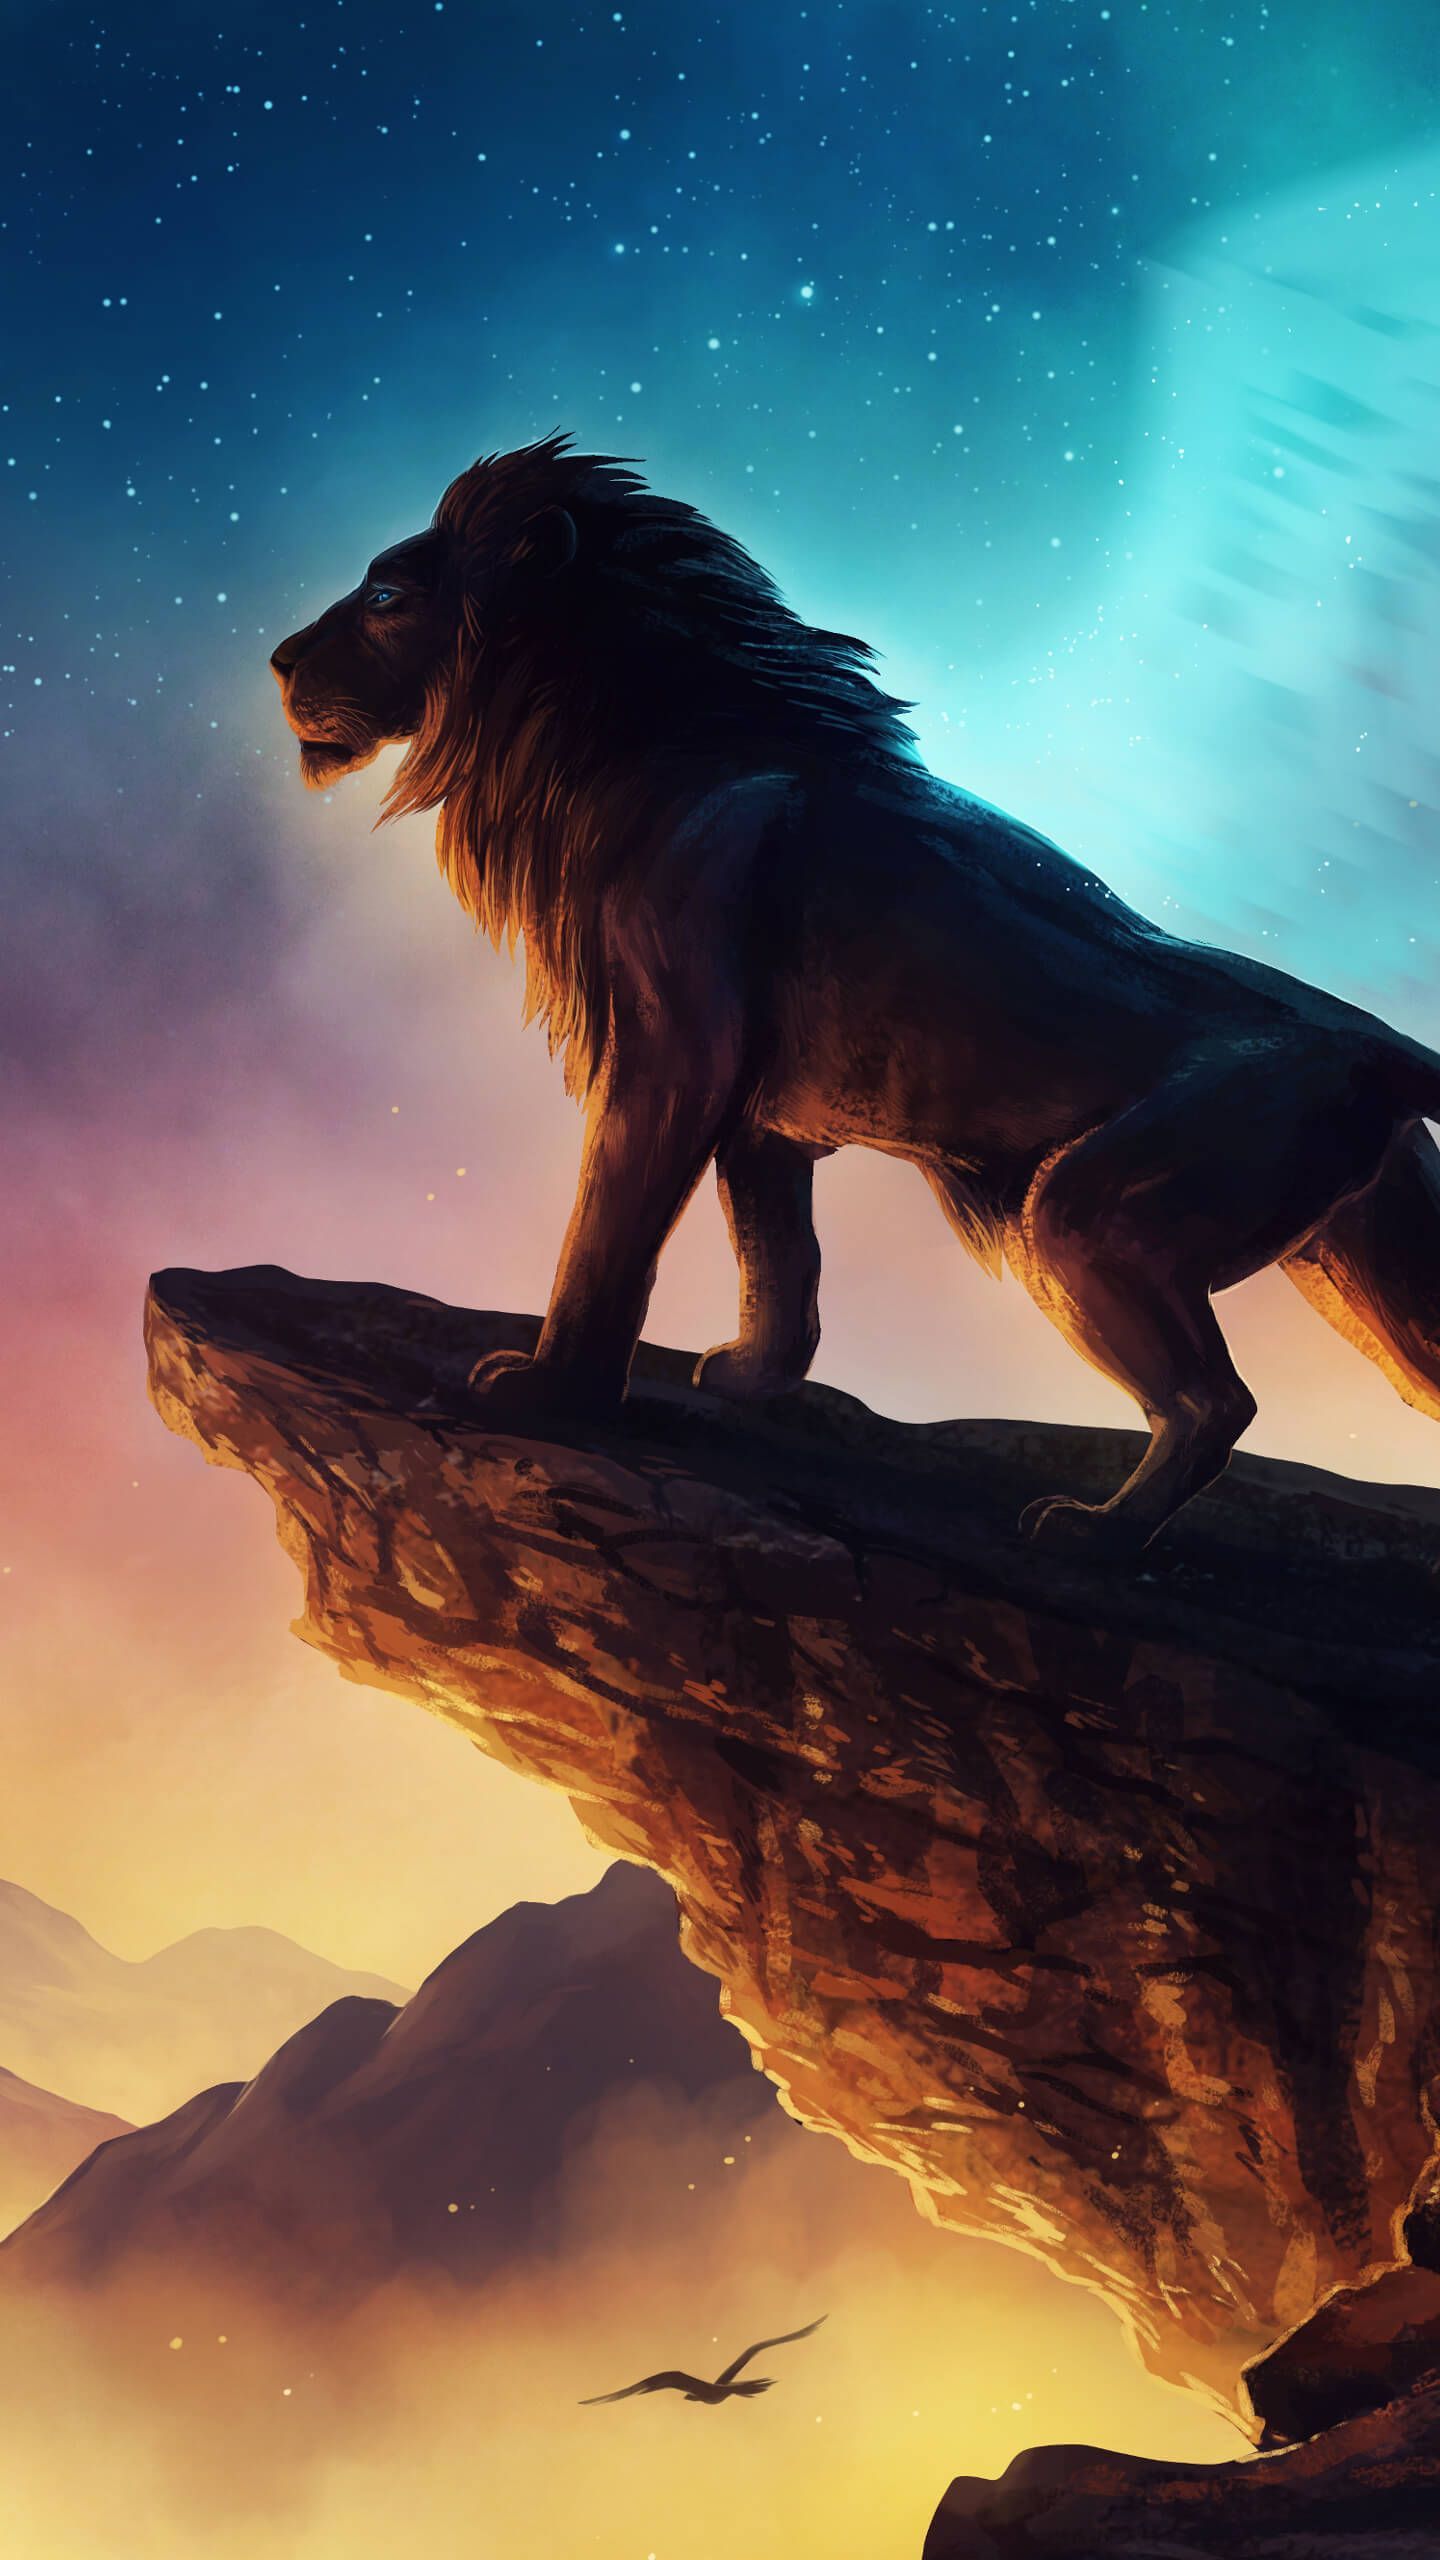 Lion King Wallpaper - Iphone Lion King Wallpaper 2019 - HD Wallpaper 